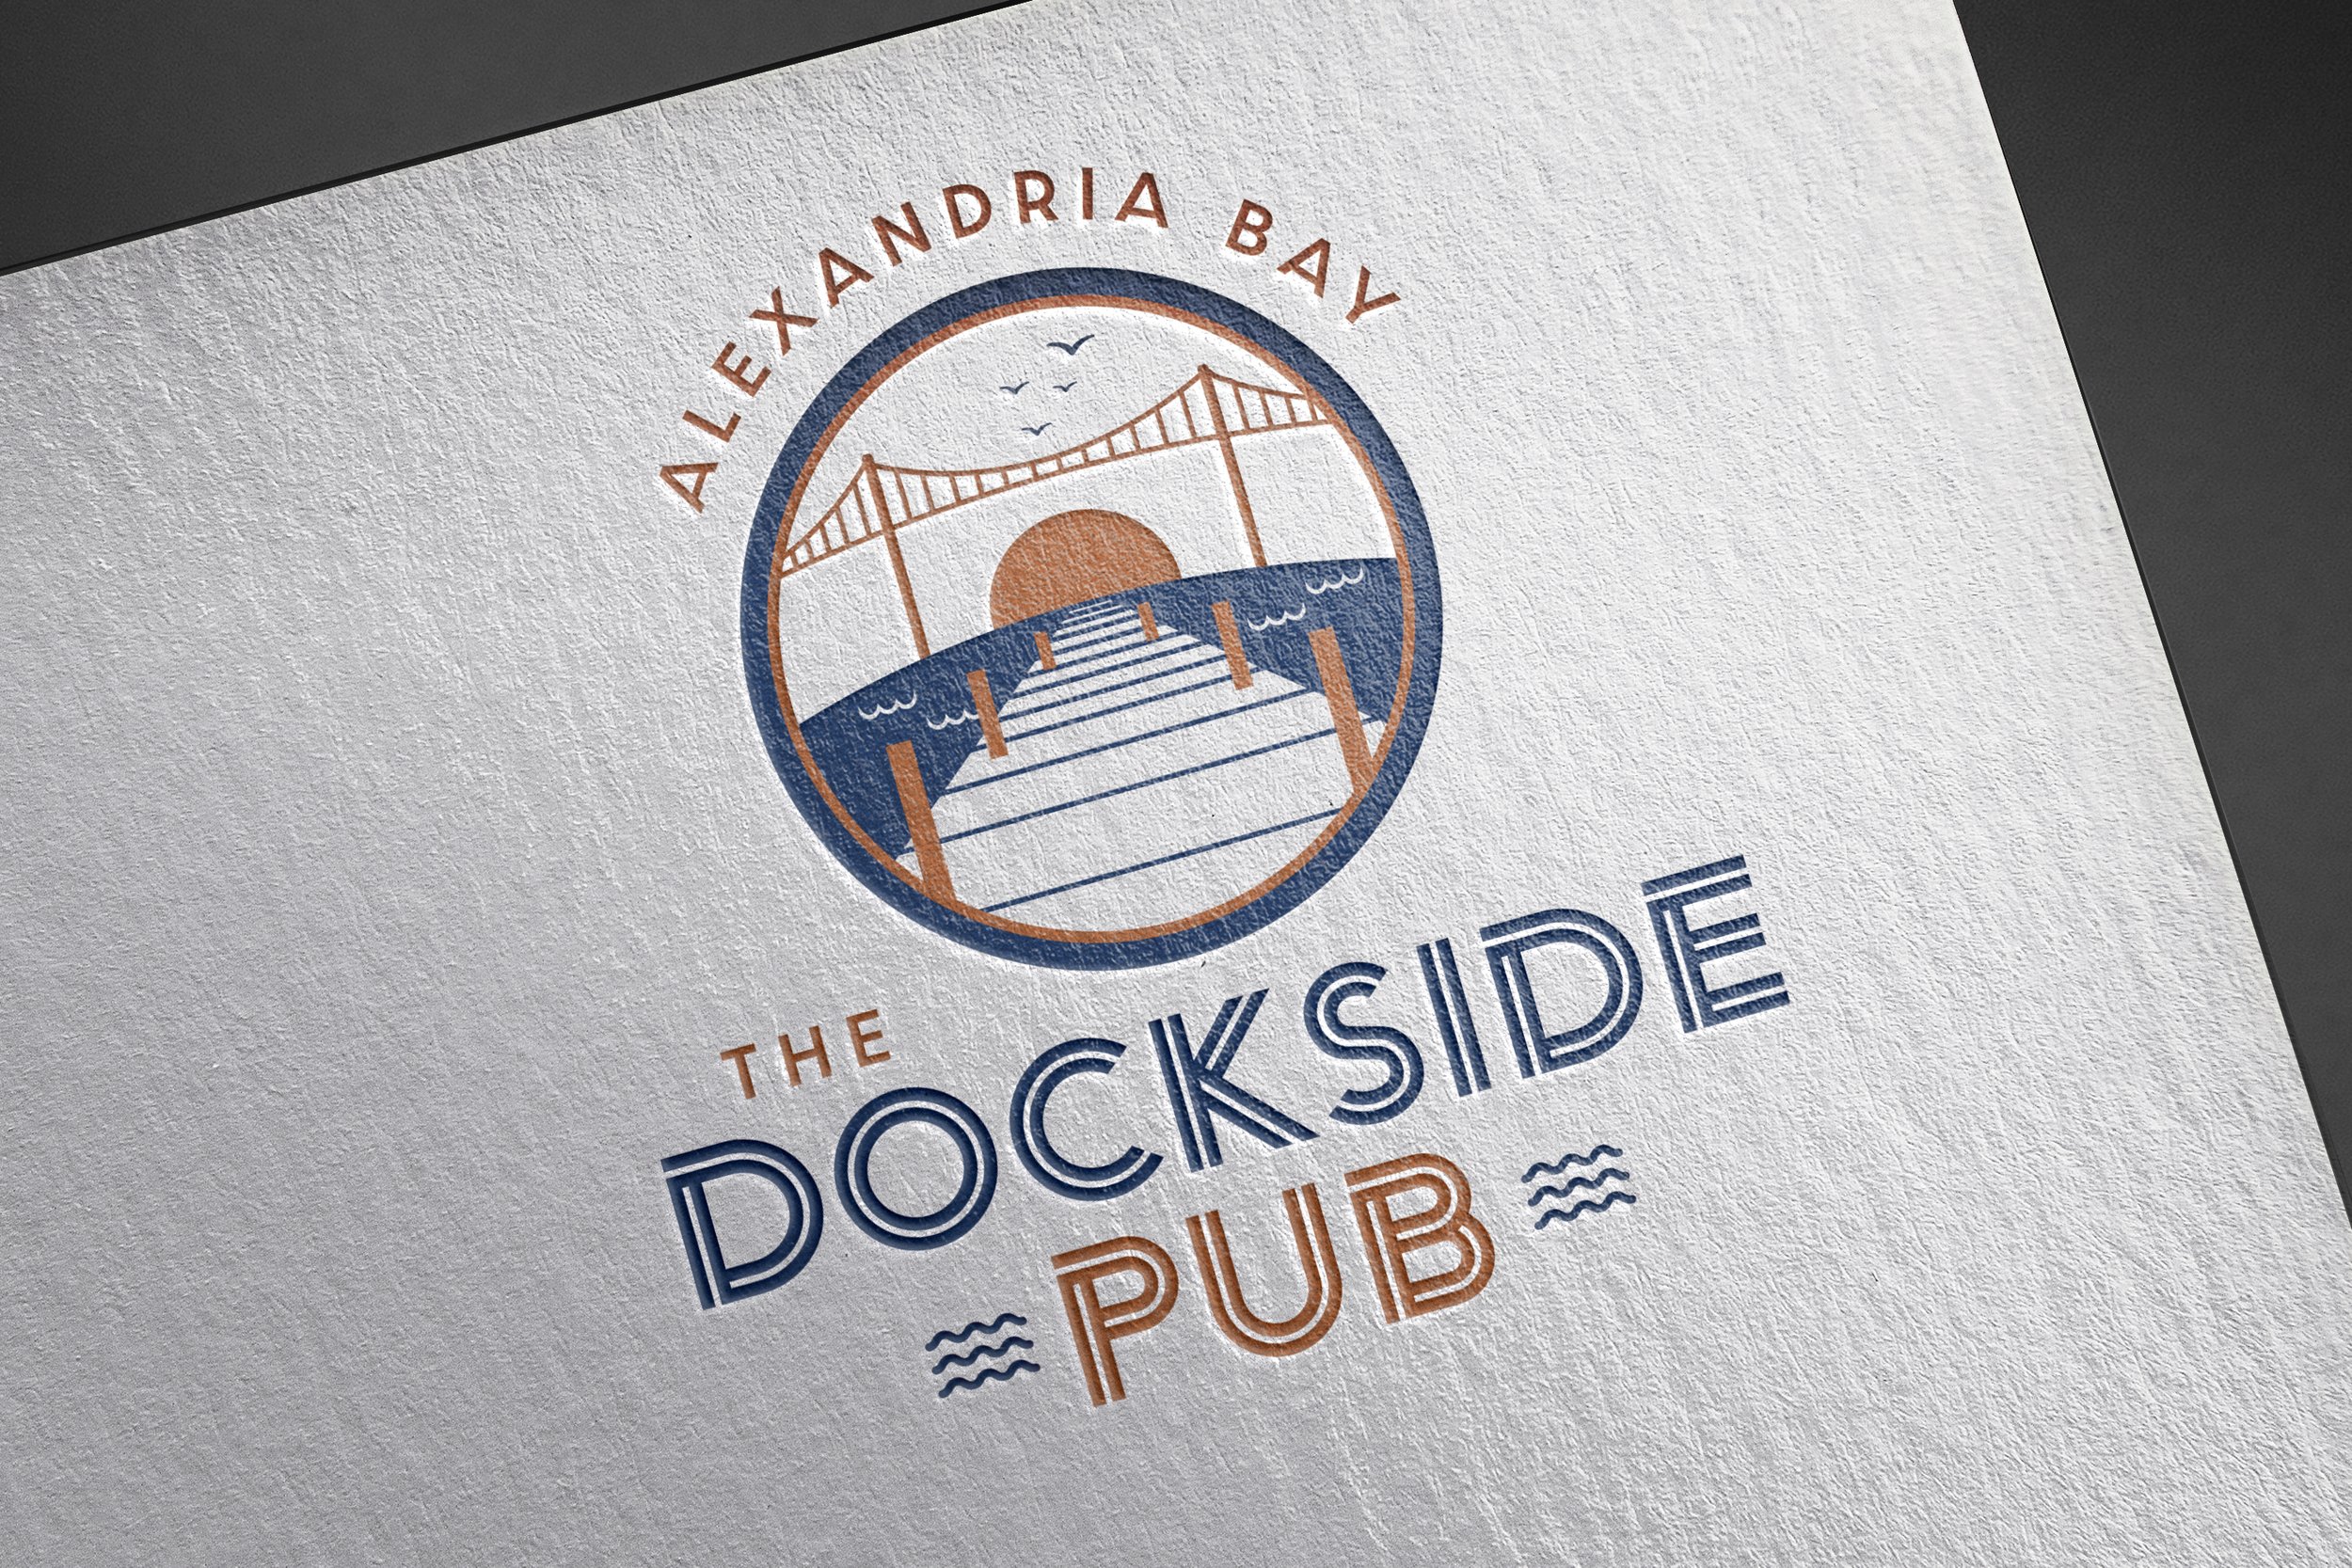 dockside pub.jpg